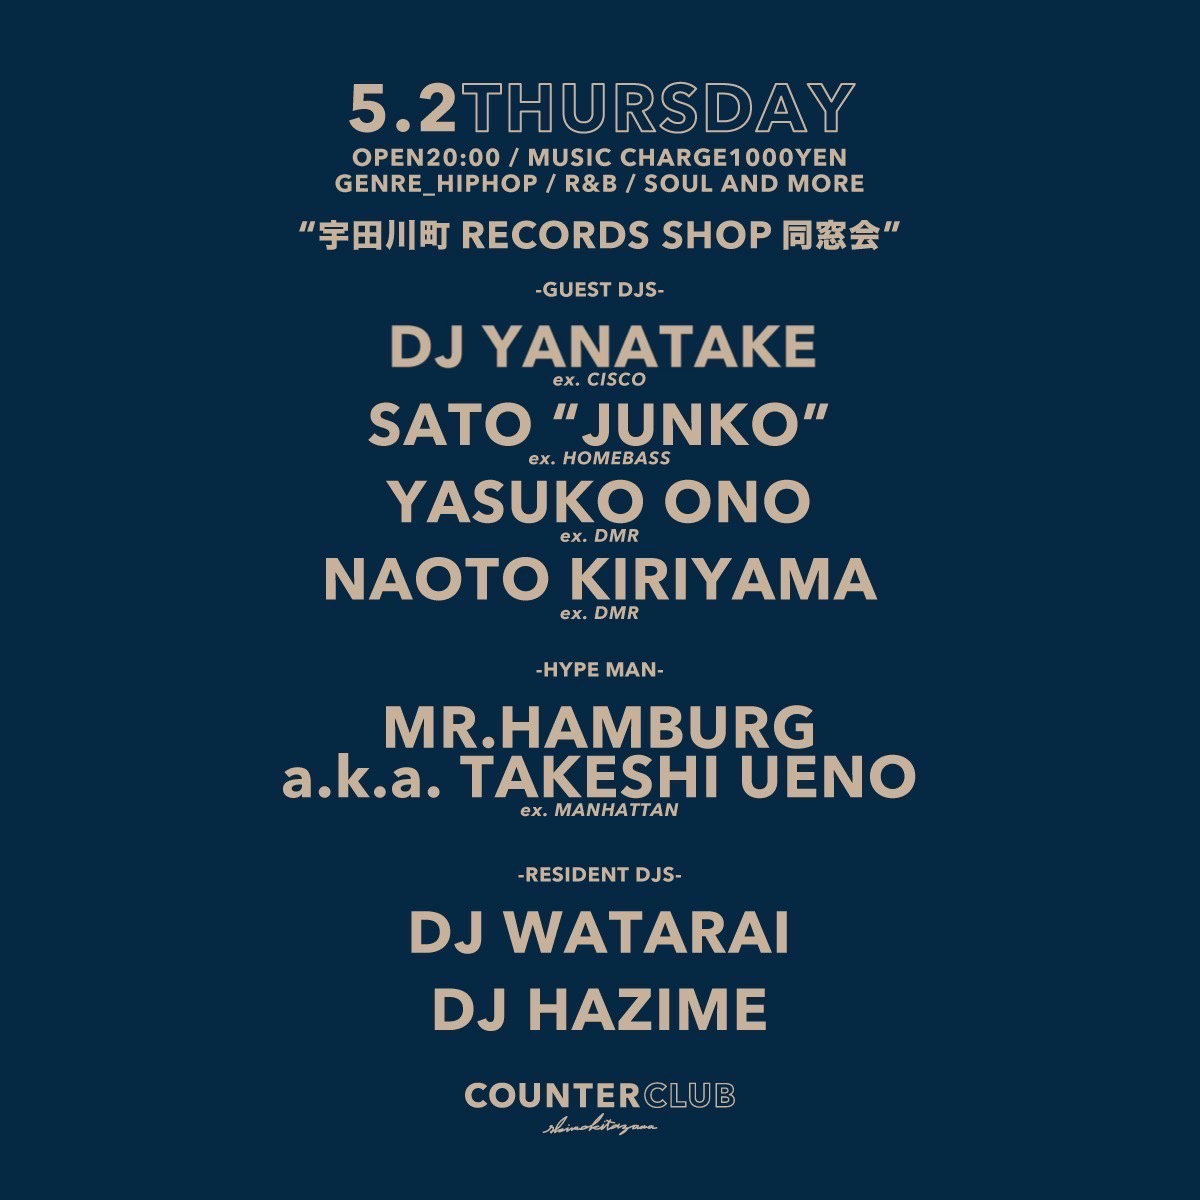 DJ YANATAKE (@yanatake) 出演イベント 5/2(木祝前) 20:00 下北沢 COUNTER CLUB (@counter_club) 宇田川町'RECORDS SHOP'同窓会 ▼RESIDENT DJ WATARAI, DJ HAZIME ▼GEUST DJ YANATAKE, SATO 'JUNKO', YASUKO ONO, NAOTO KIRIYAMA, TAKESHI UENO counter-club.com #blockfm #INSIDE_OUT